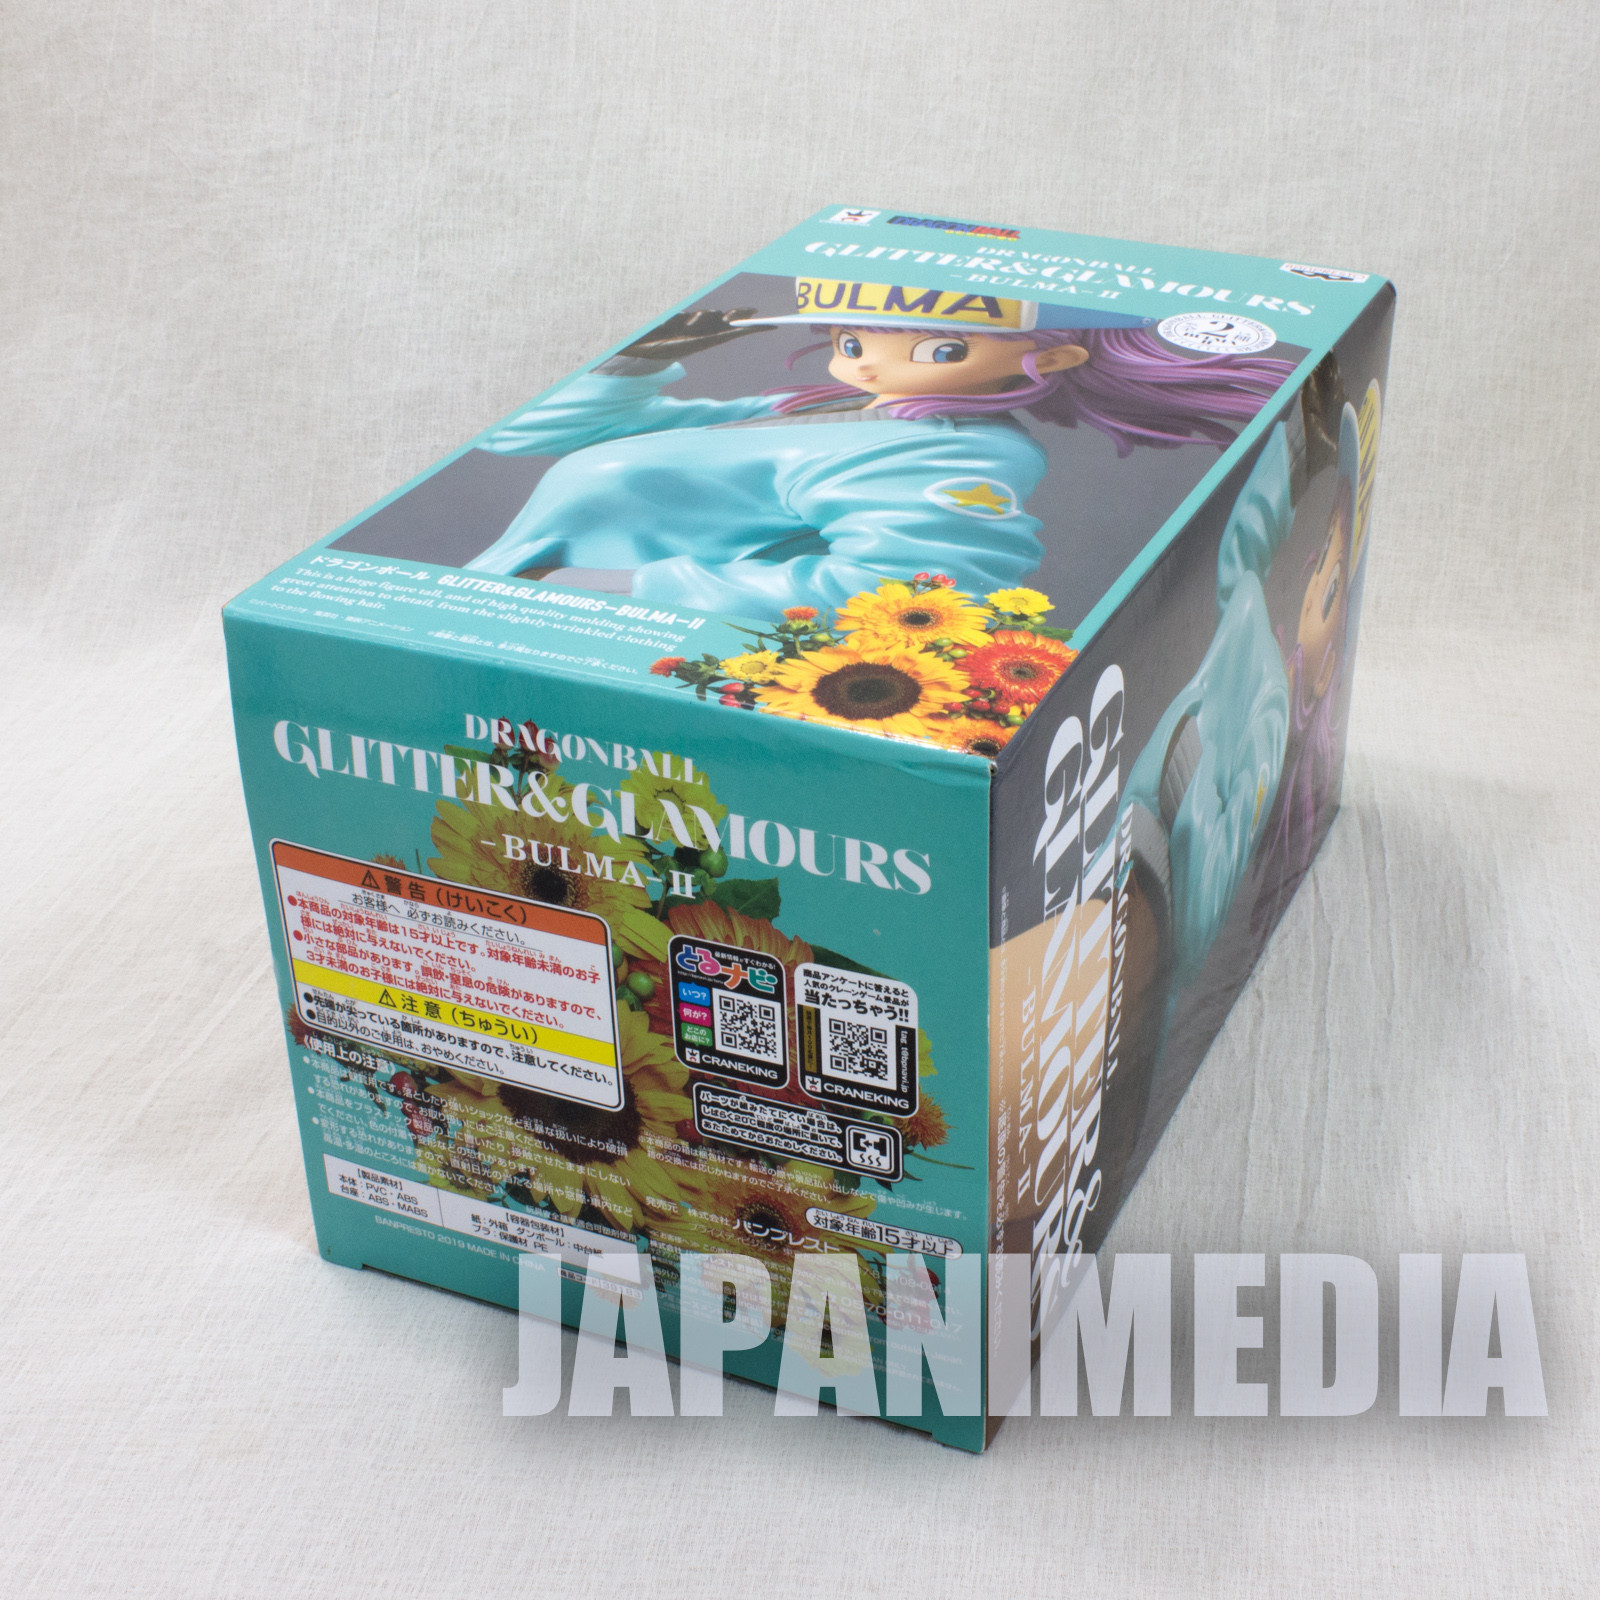 Dragon Ball Bulma Flight Jacket Blue Gltter & Glamours Figure Banpresto JAPAN ANIME